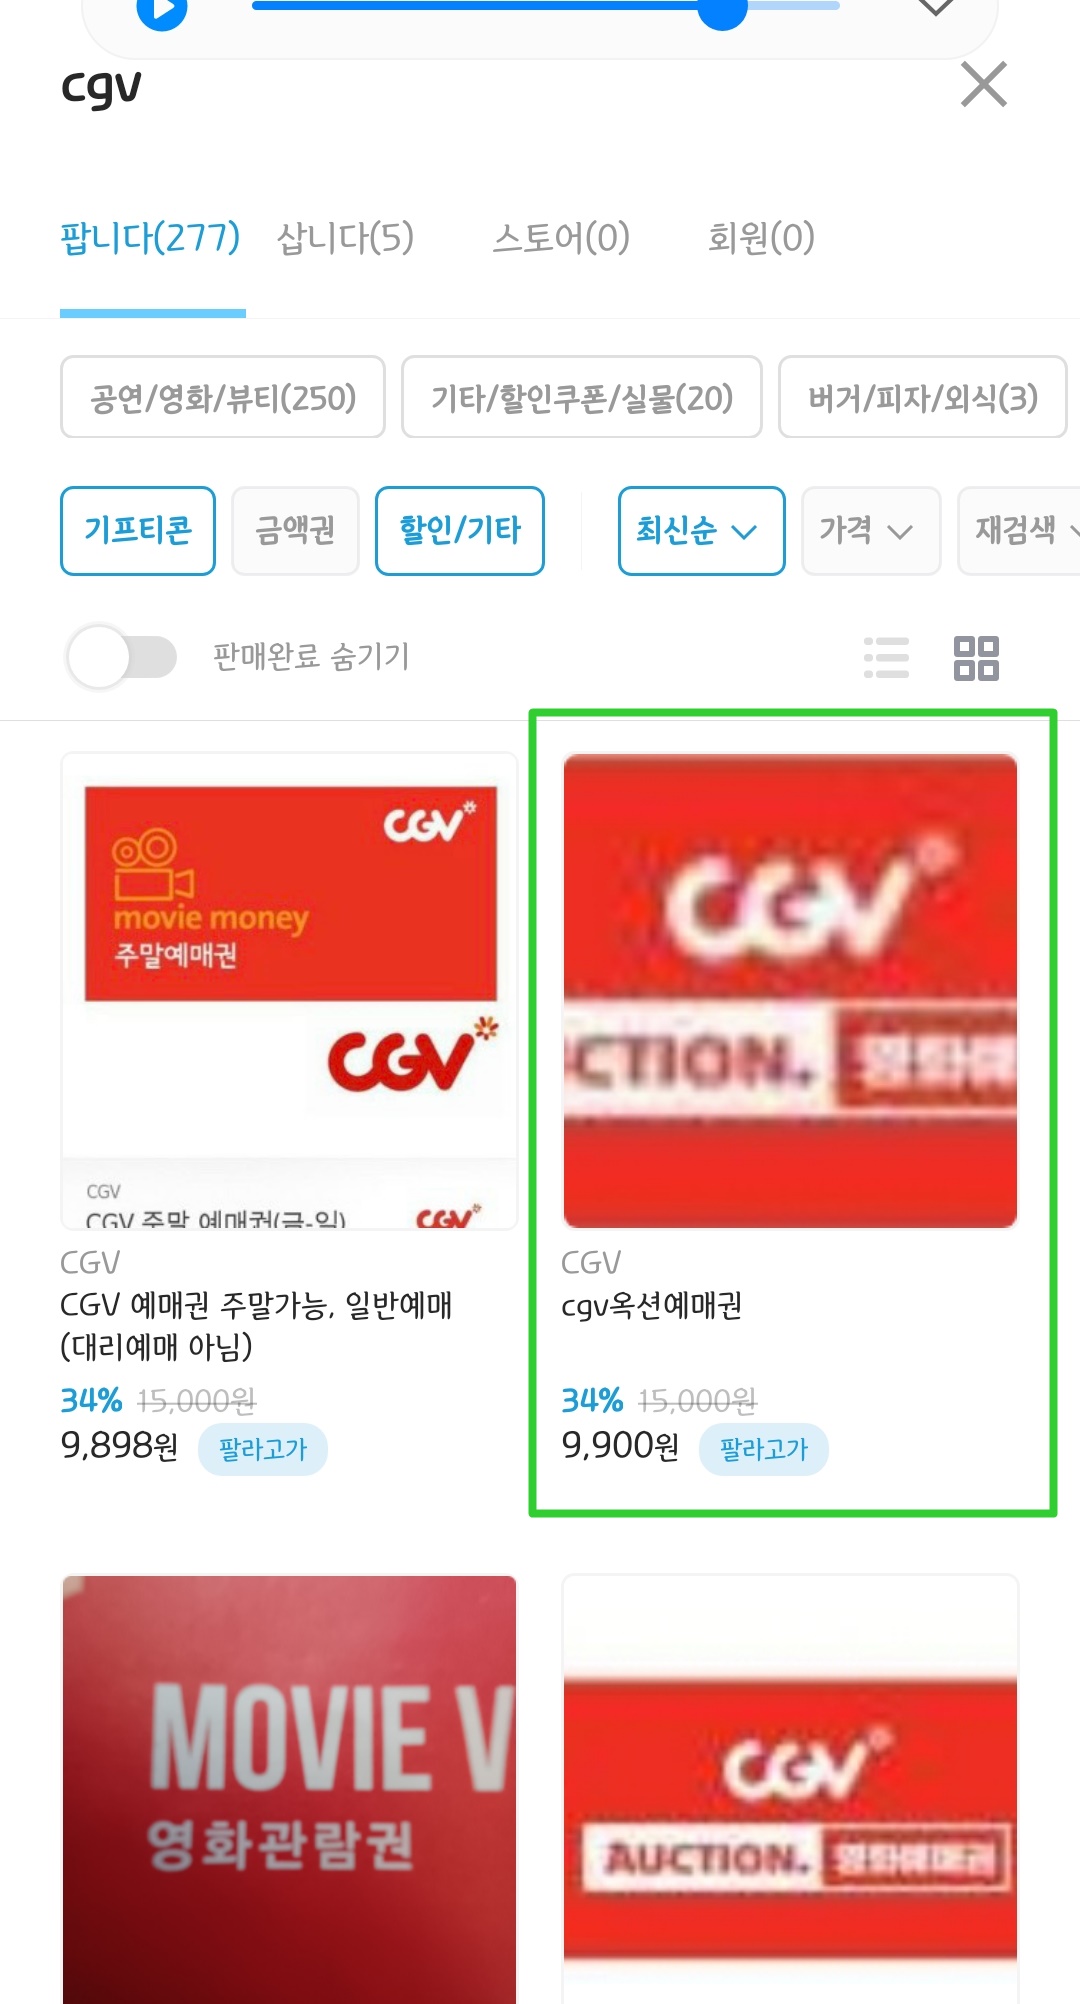 CGV 영화 할인 옥션예매권으로 1인 5천원 할인 방법입니다(feat.누구나) - 책크맘 라이프